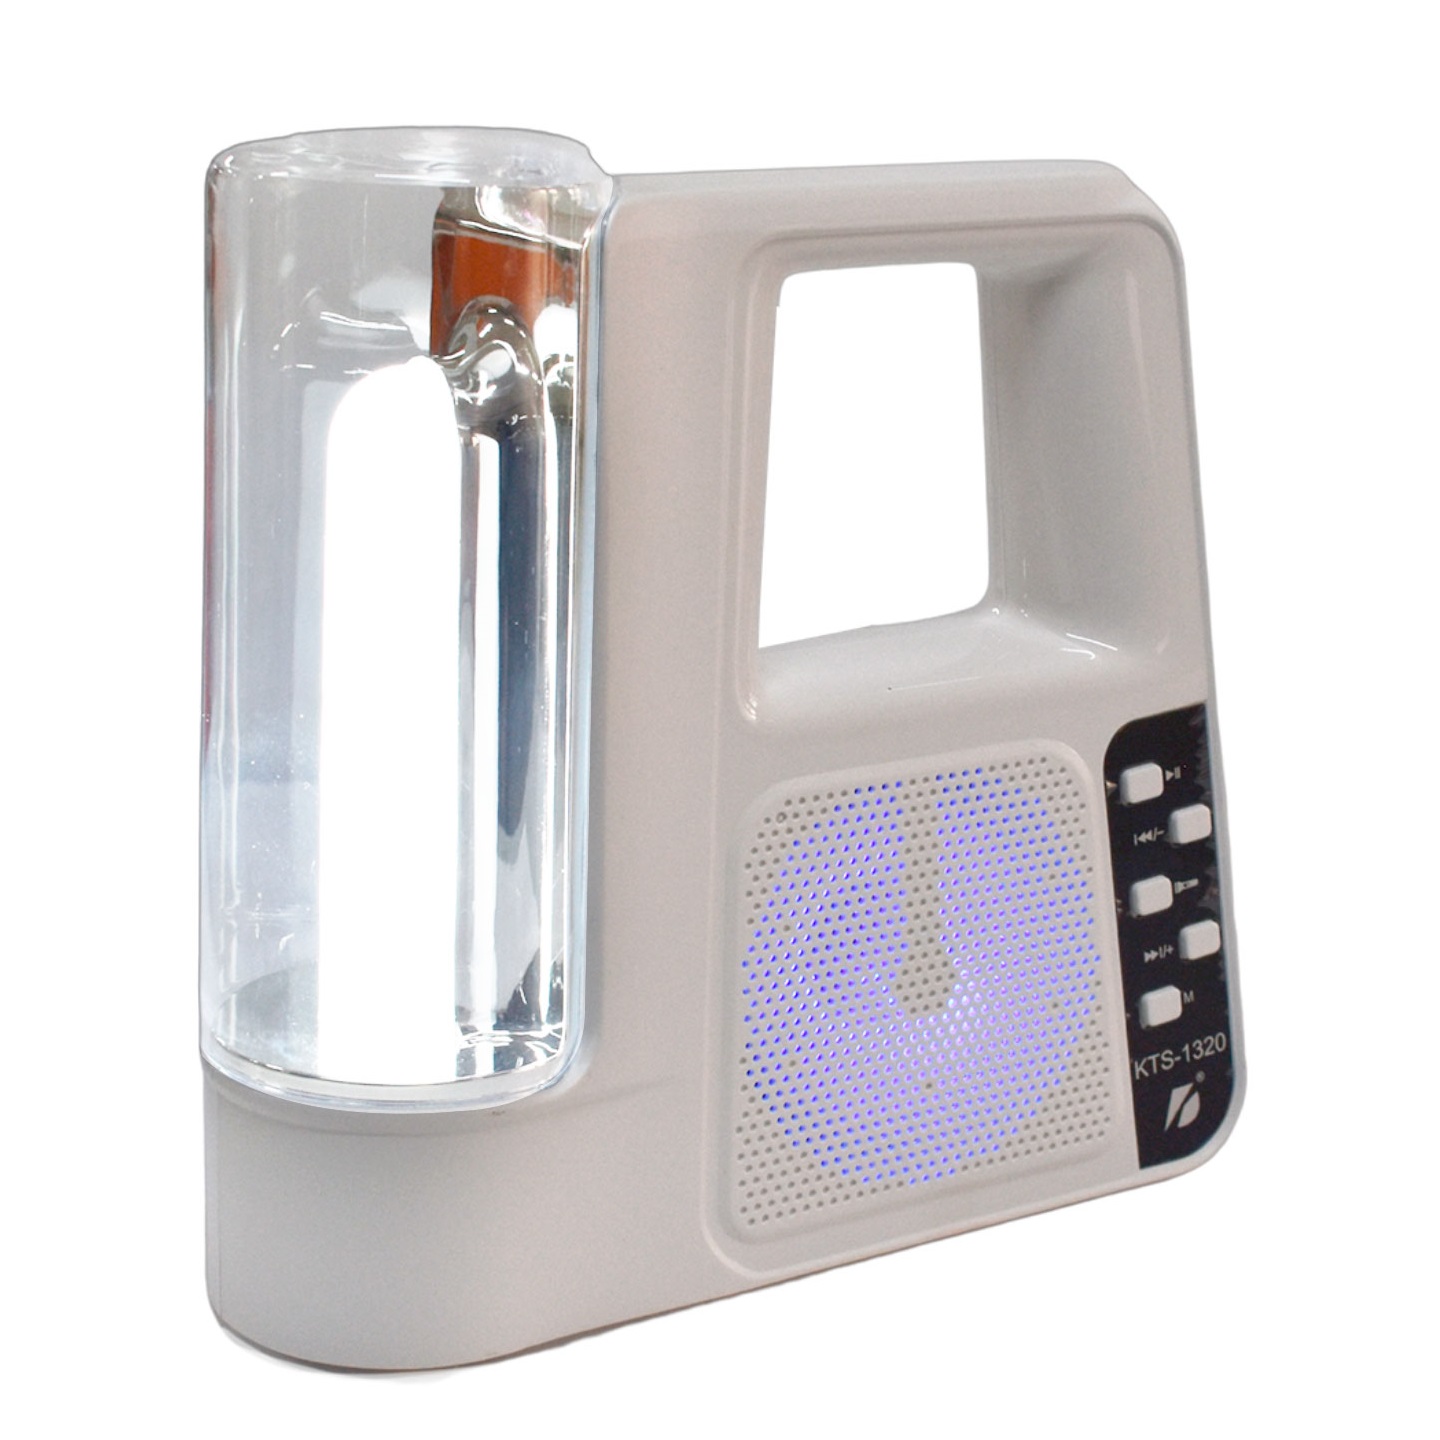 Portable speaker KTS-1320, Bluetooth, with LED lamp, 5W, Extra Bass, USB Stick, Card, FM Radio